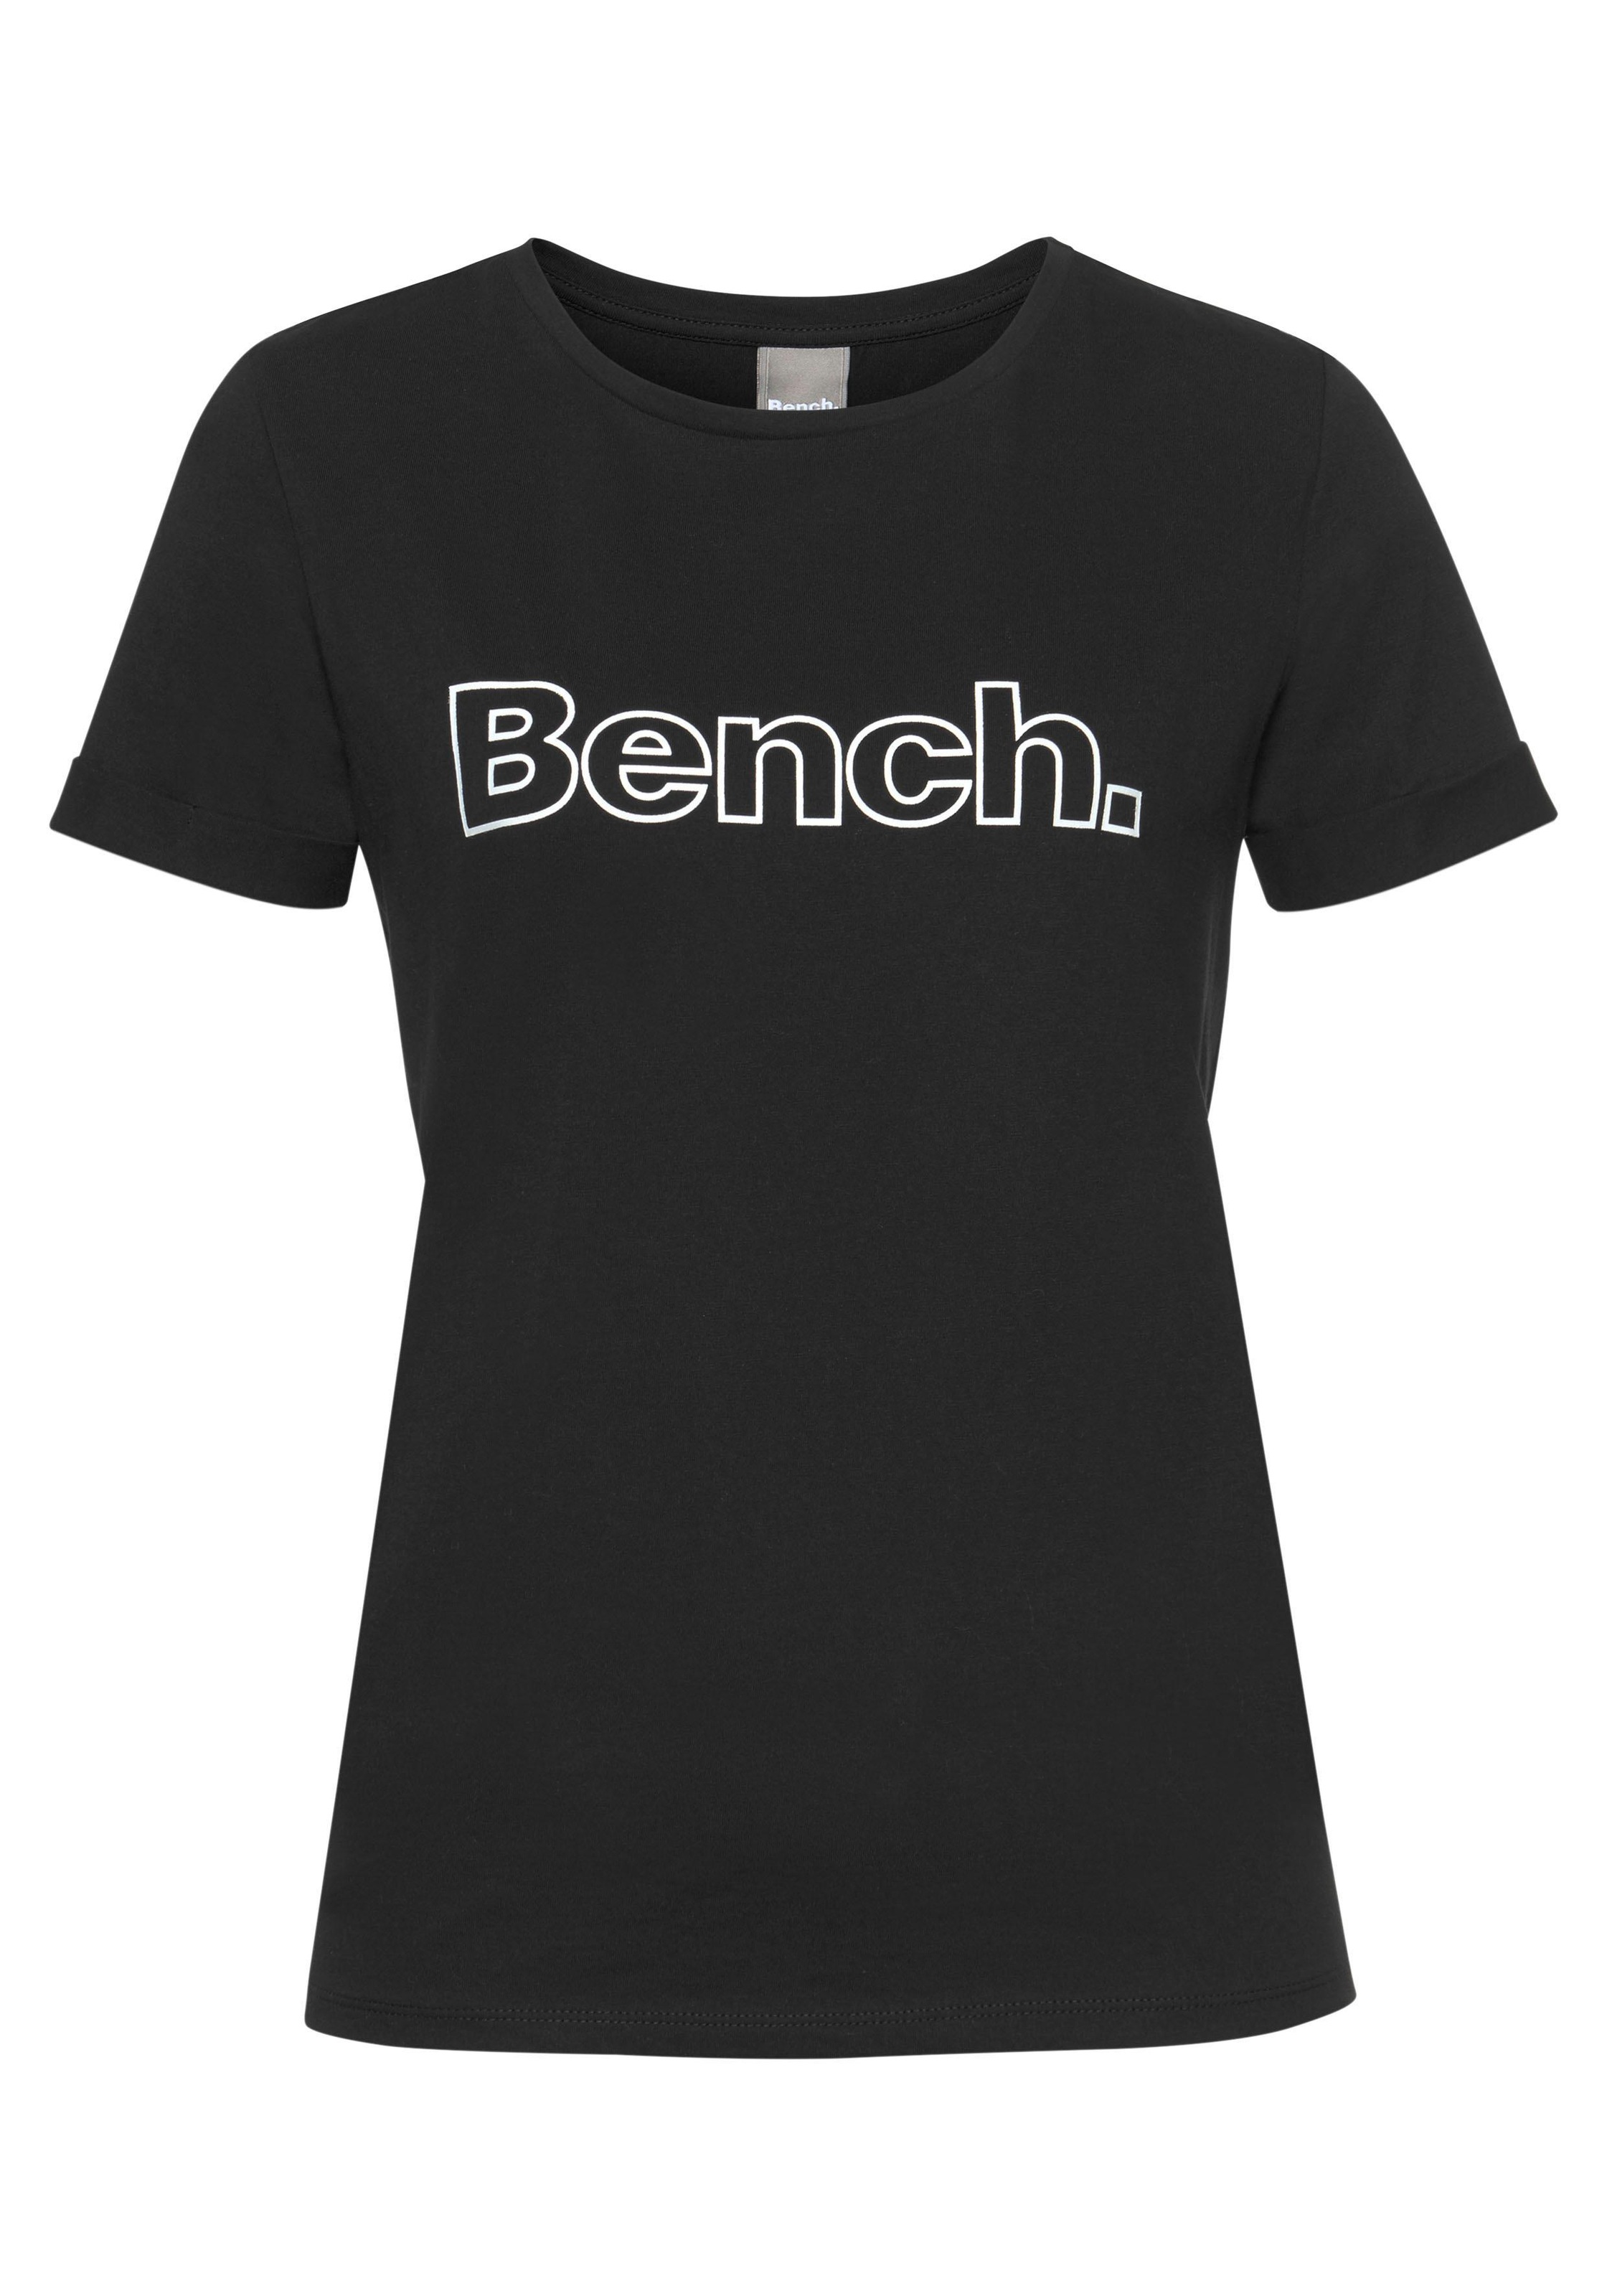 Bench. T-Shirt shoppen